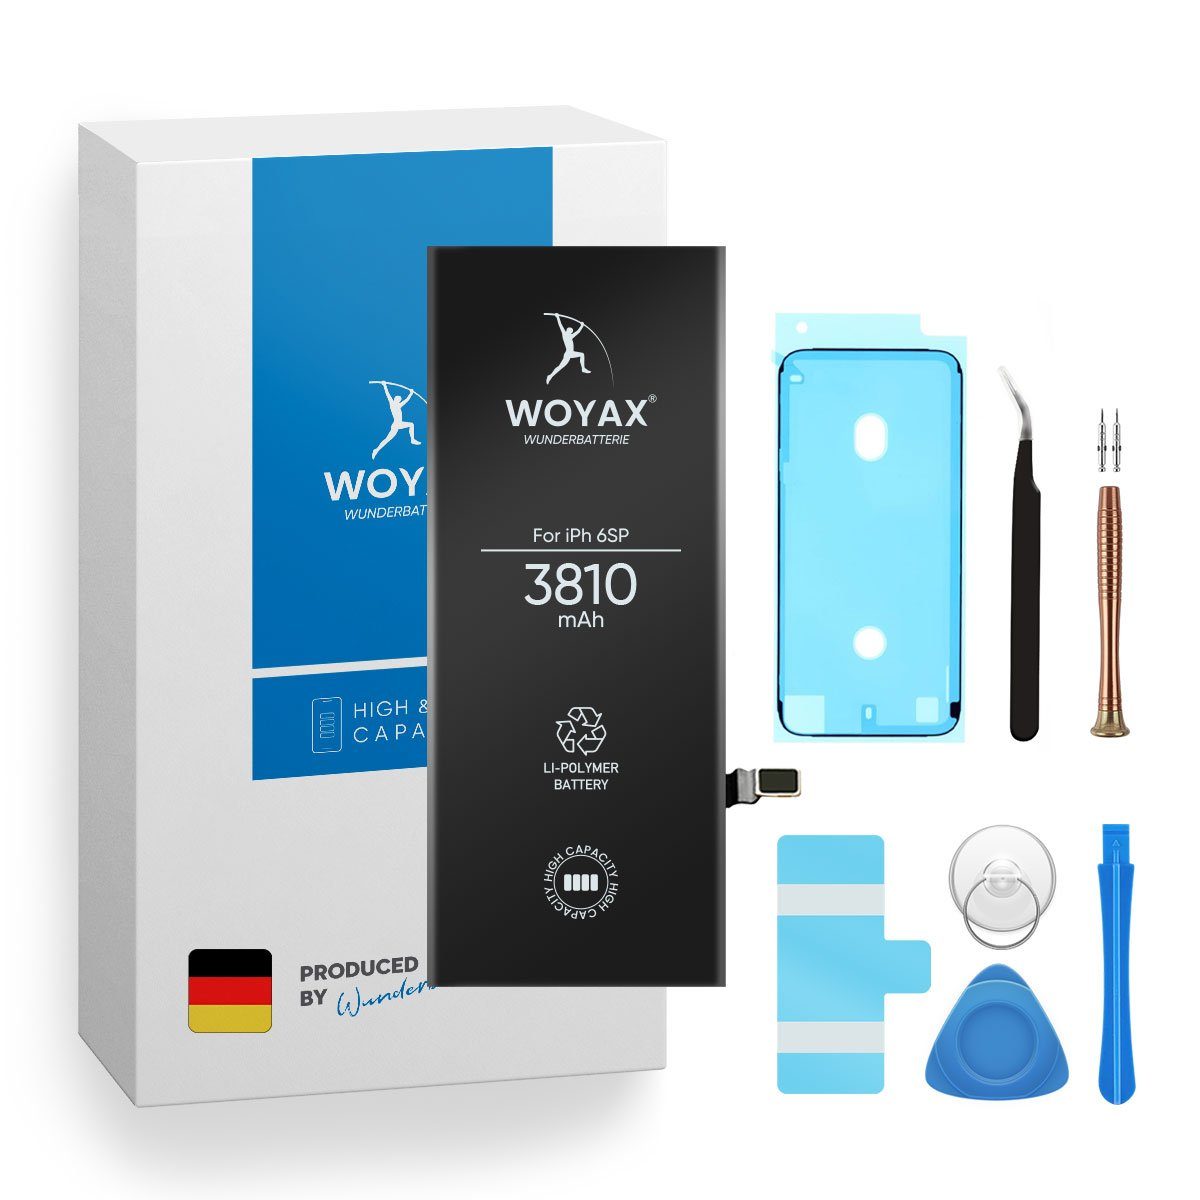 Woyax Wunderbatterie Akku für iPhone 6S Plus 3810 mAh Hohe Kapazität Handy-Akku 3810 mAh (3.82 V) | Akkus und PowerBanks